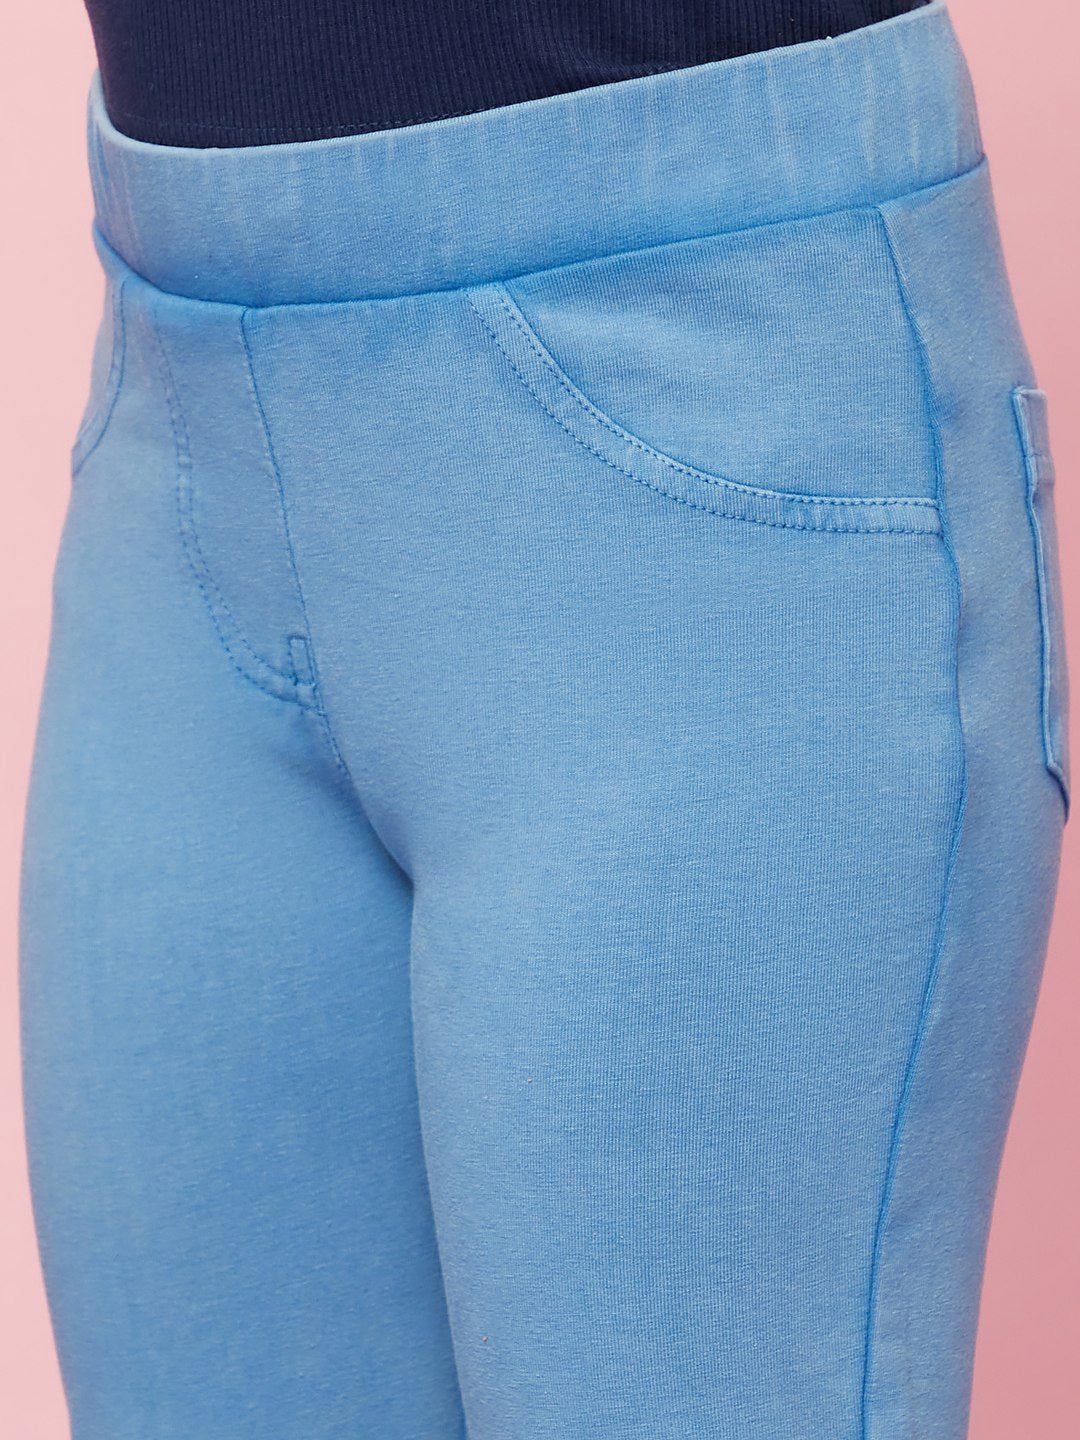 Kid Girls' Dark Blue Sleeveless Top and Light Blue Pants Set